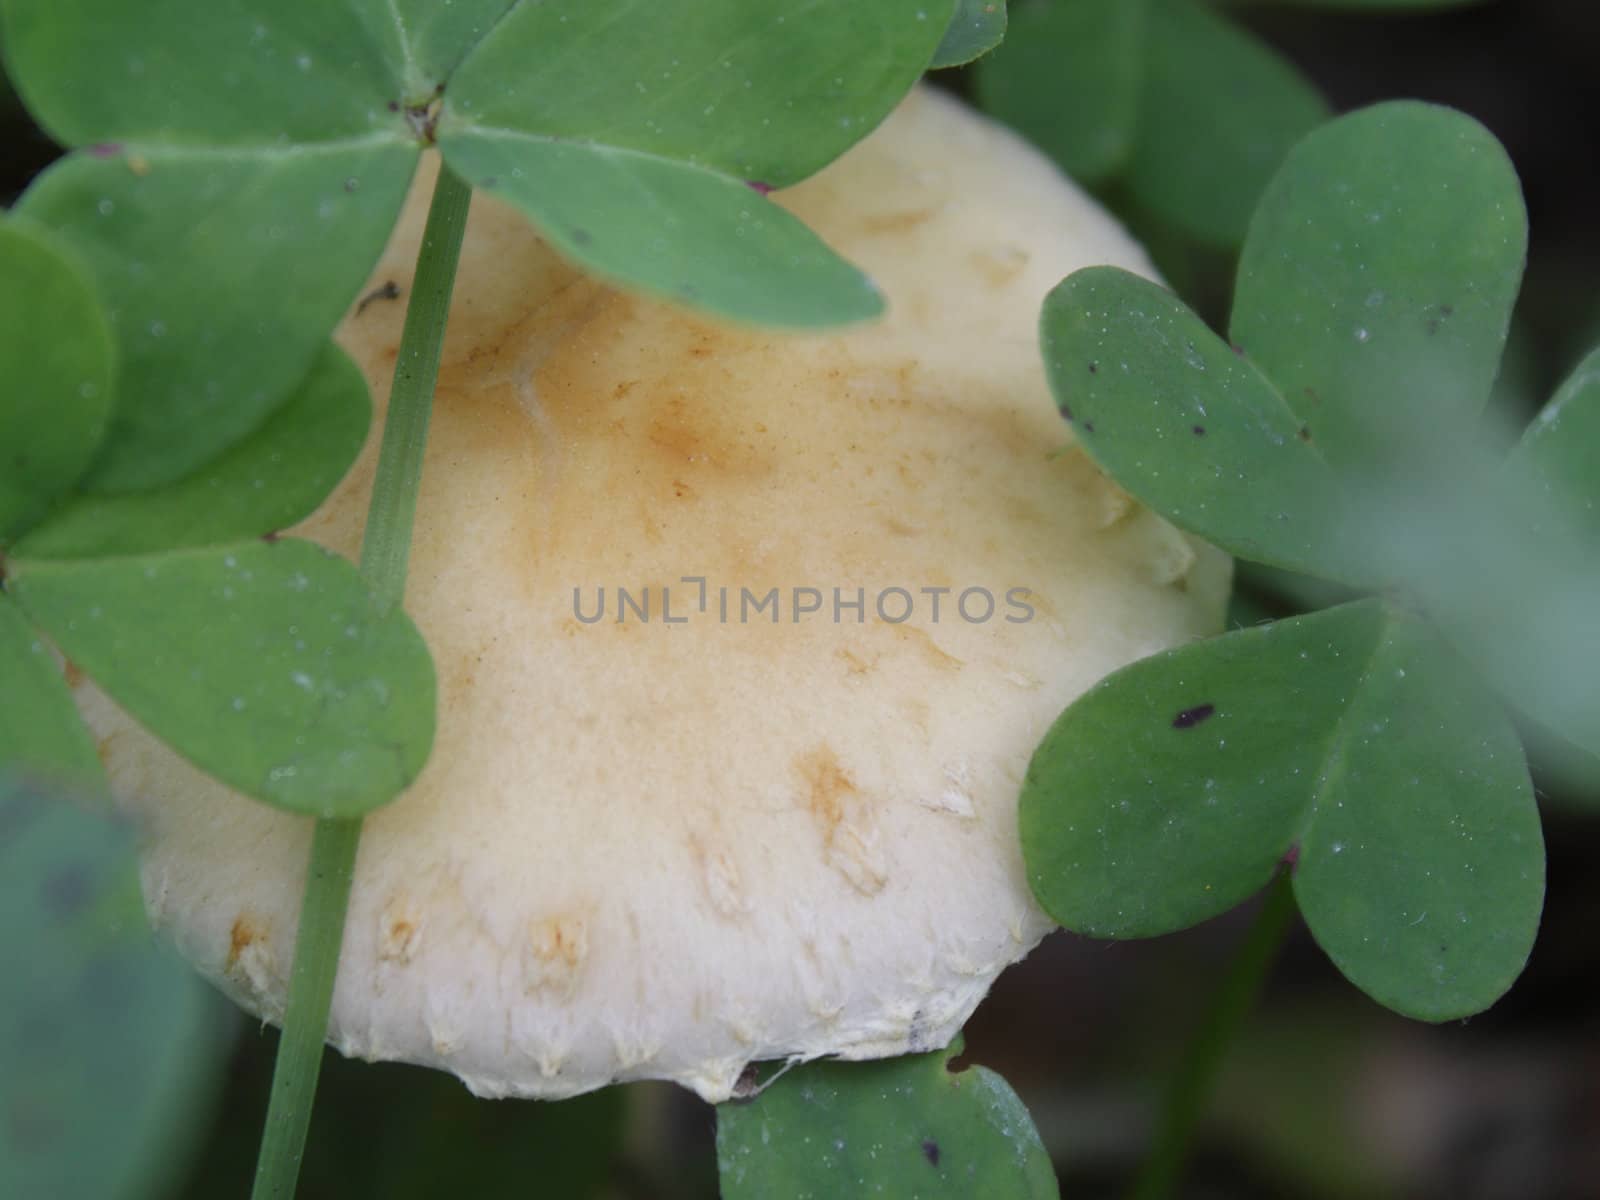 Mushroom among clover by pulen